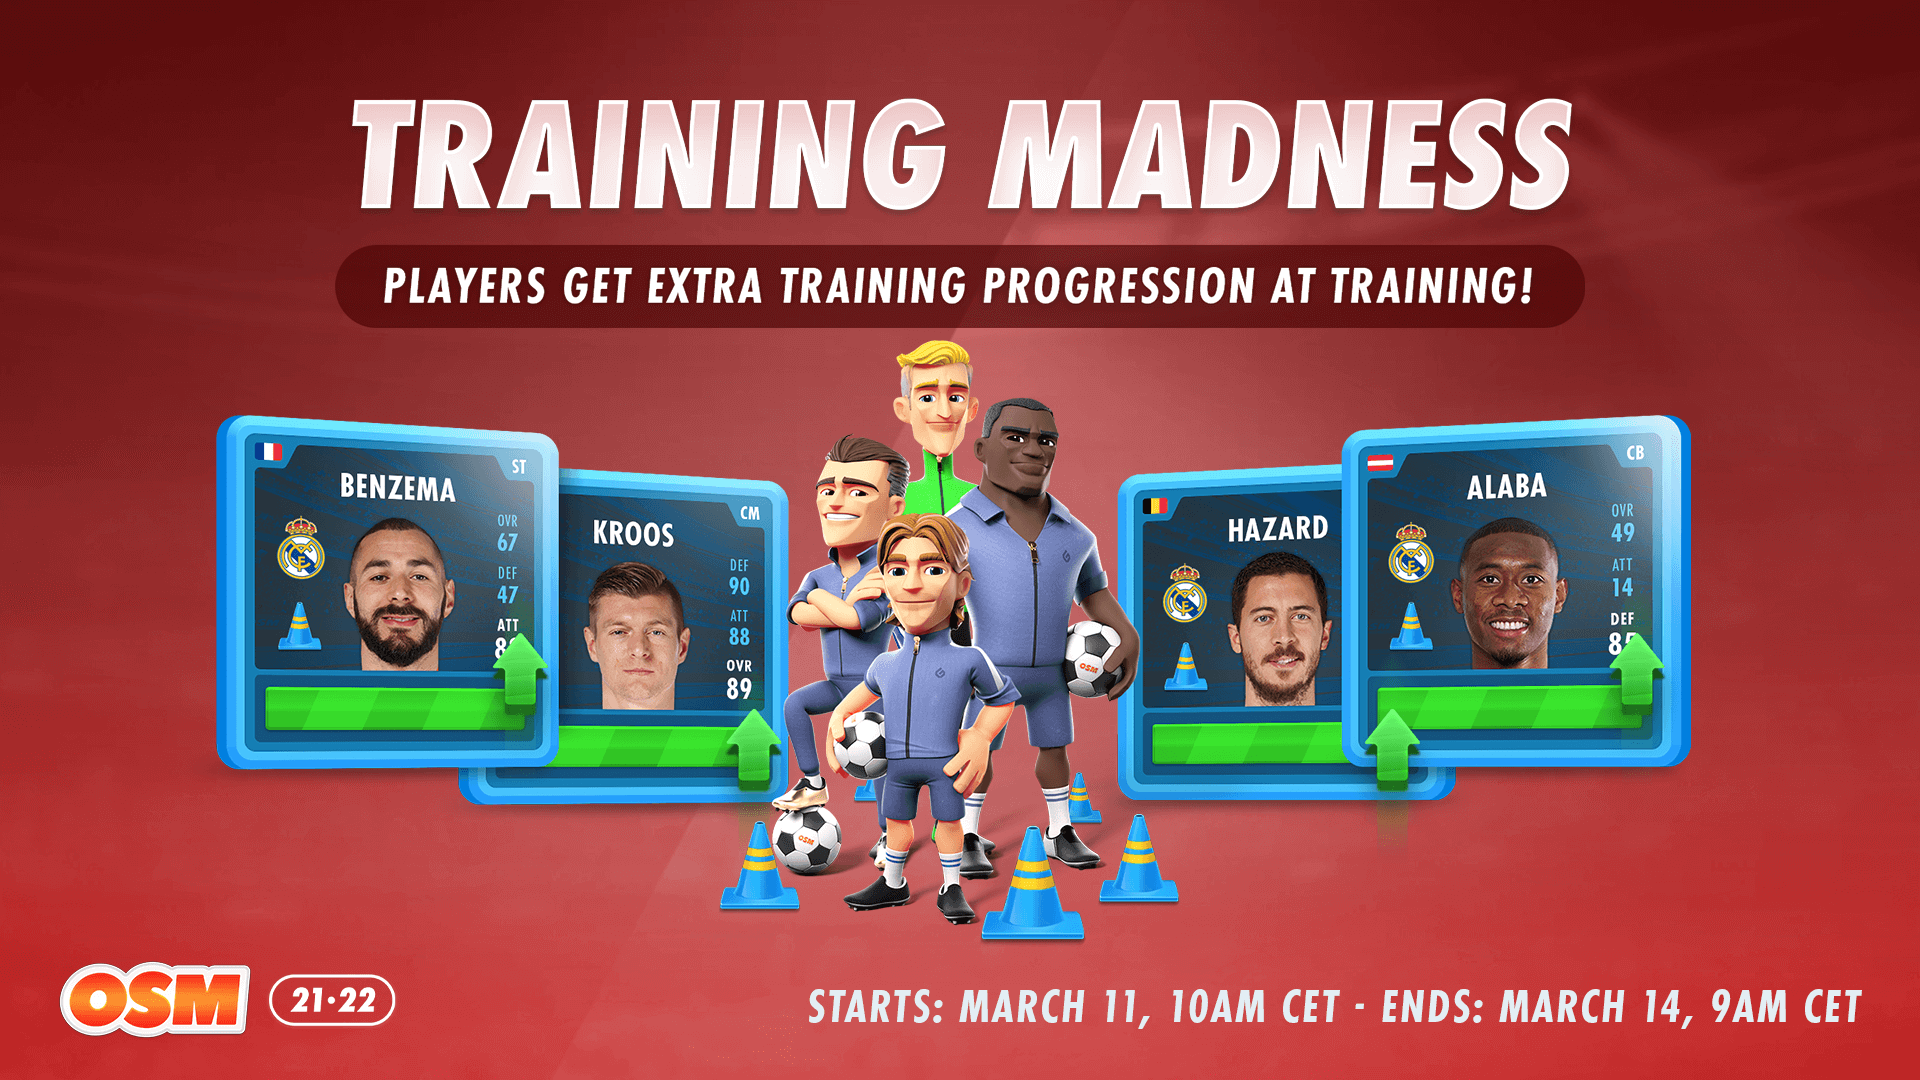 Forum_Training Madness_REDDIT (1).png